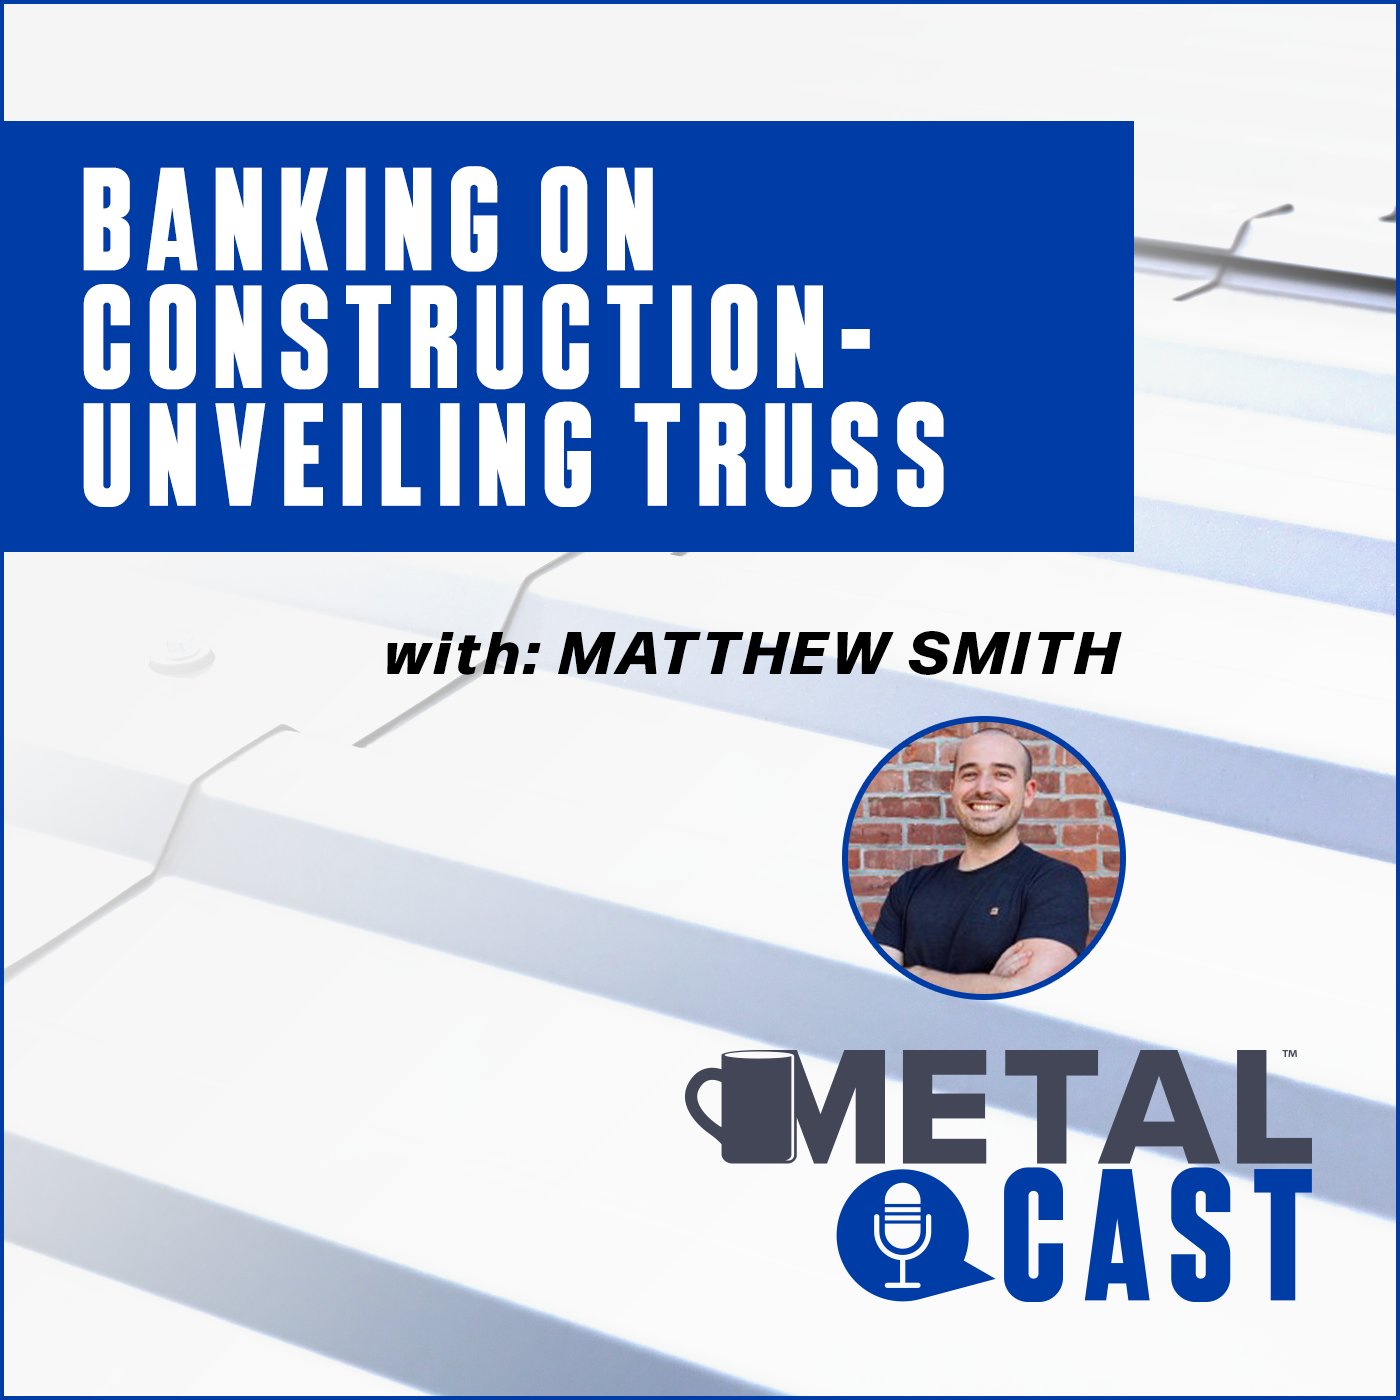 Banking on Construction - Truss MetaCast